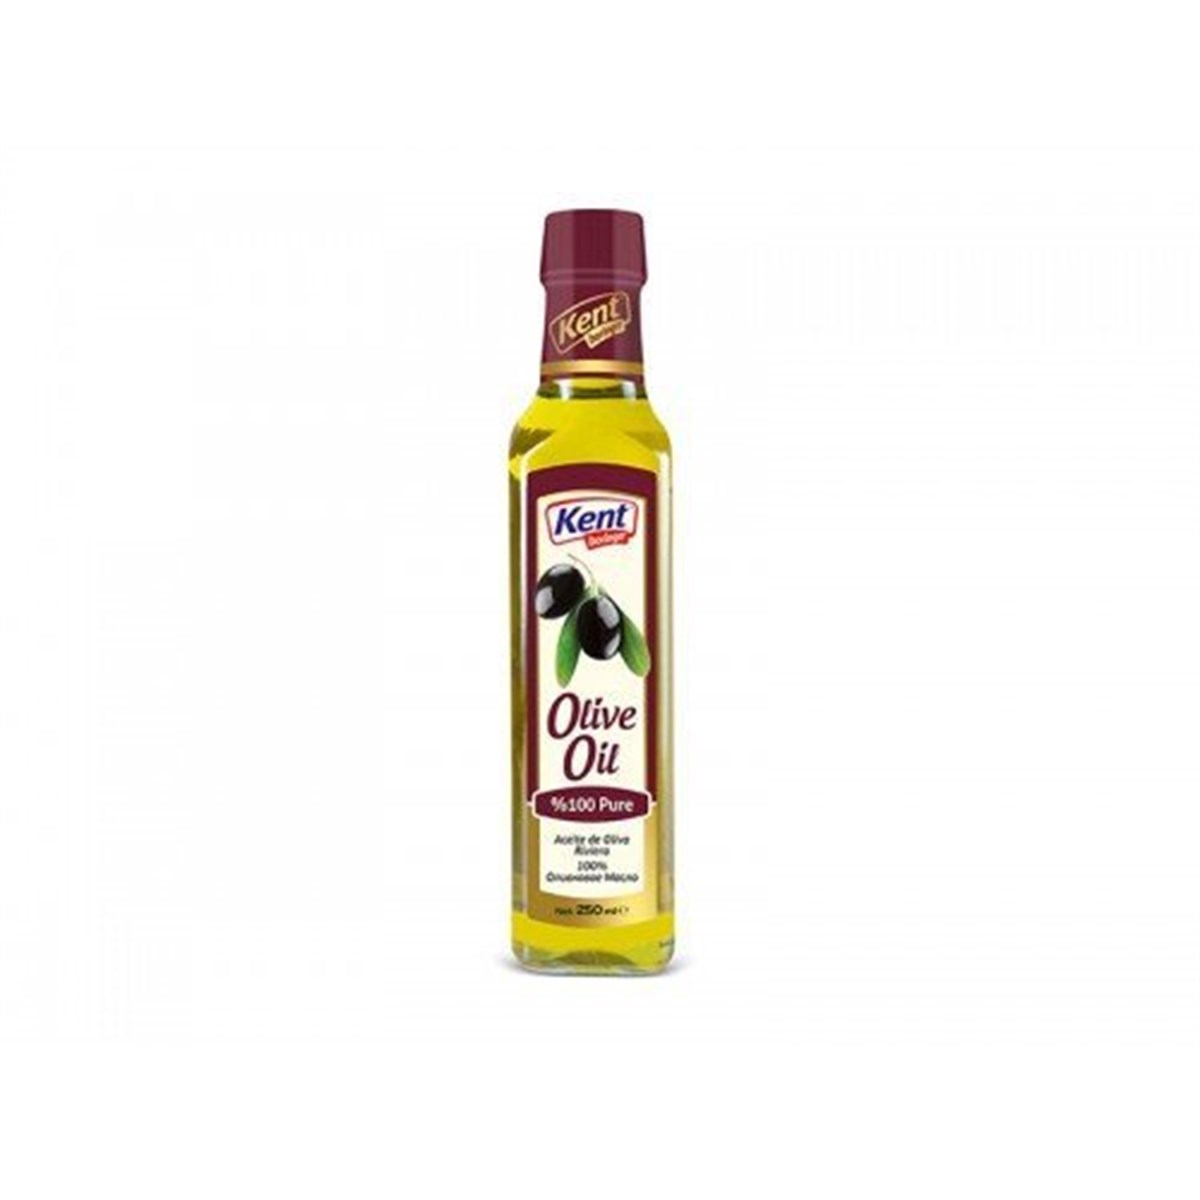 20 оливковое масло. Kent Boringer Extra Virgin оливковое масло 250 мл. Оливковое масло Olive Oil Kent Boringer 250мл. Kent Boringer Pomace оливковое масло 250 мл. ОЛИВКОВОЕ МАСЛО - KENT %100 PURE 500 ML.